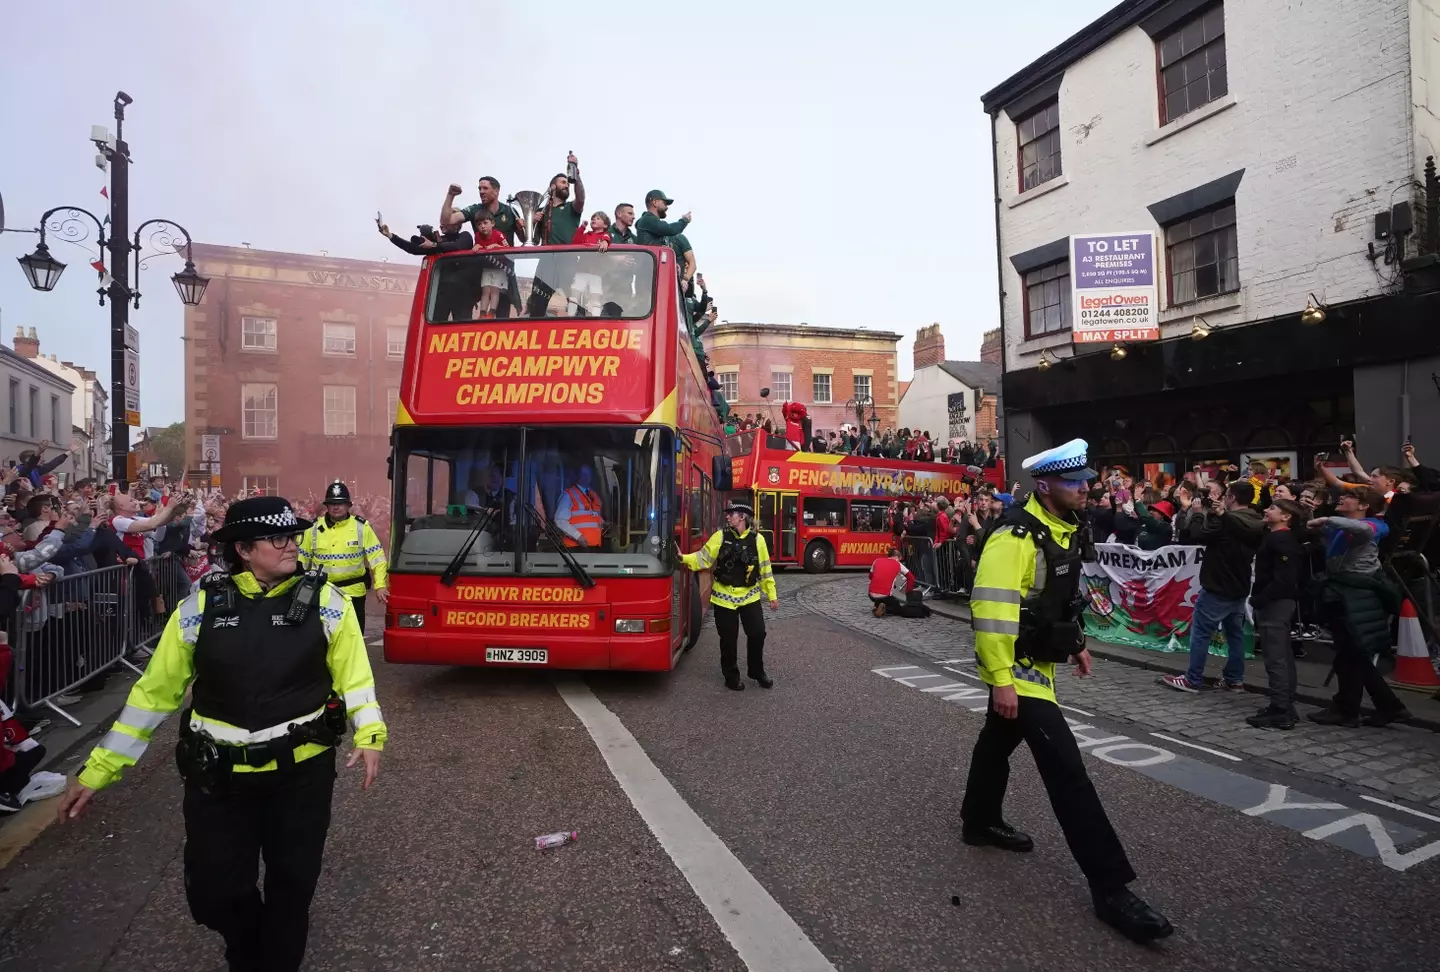 The bus parade. Image: Alamy